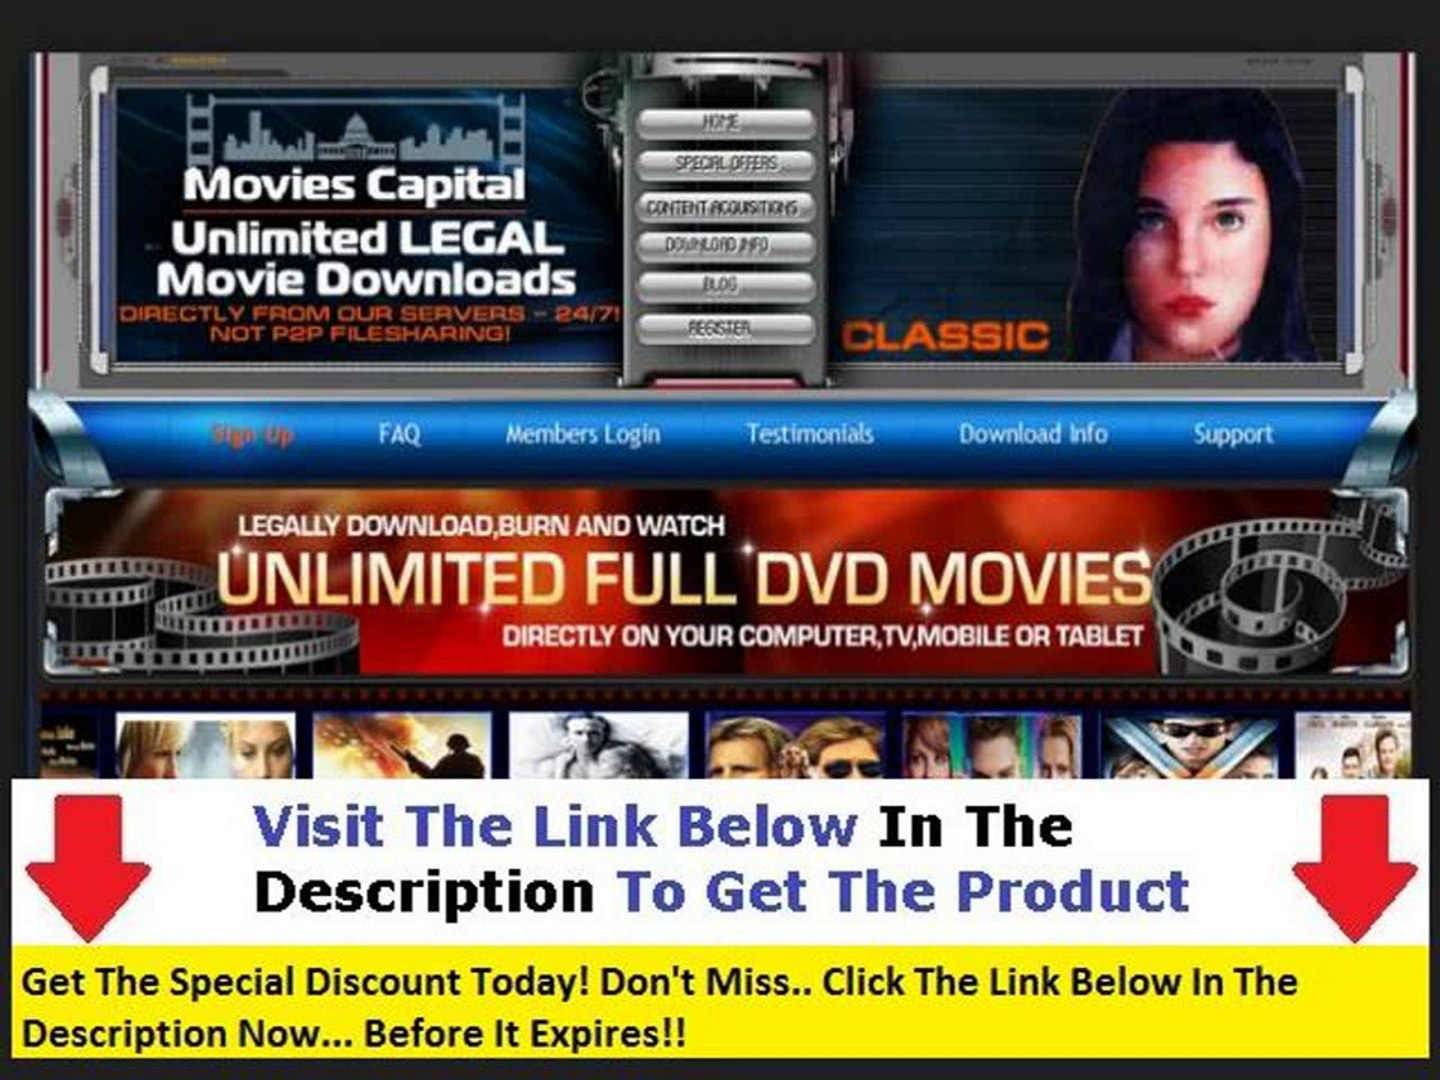 Movies Capital Cost + Movies Capital Feedback